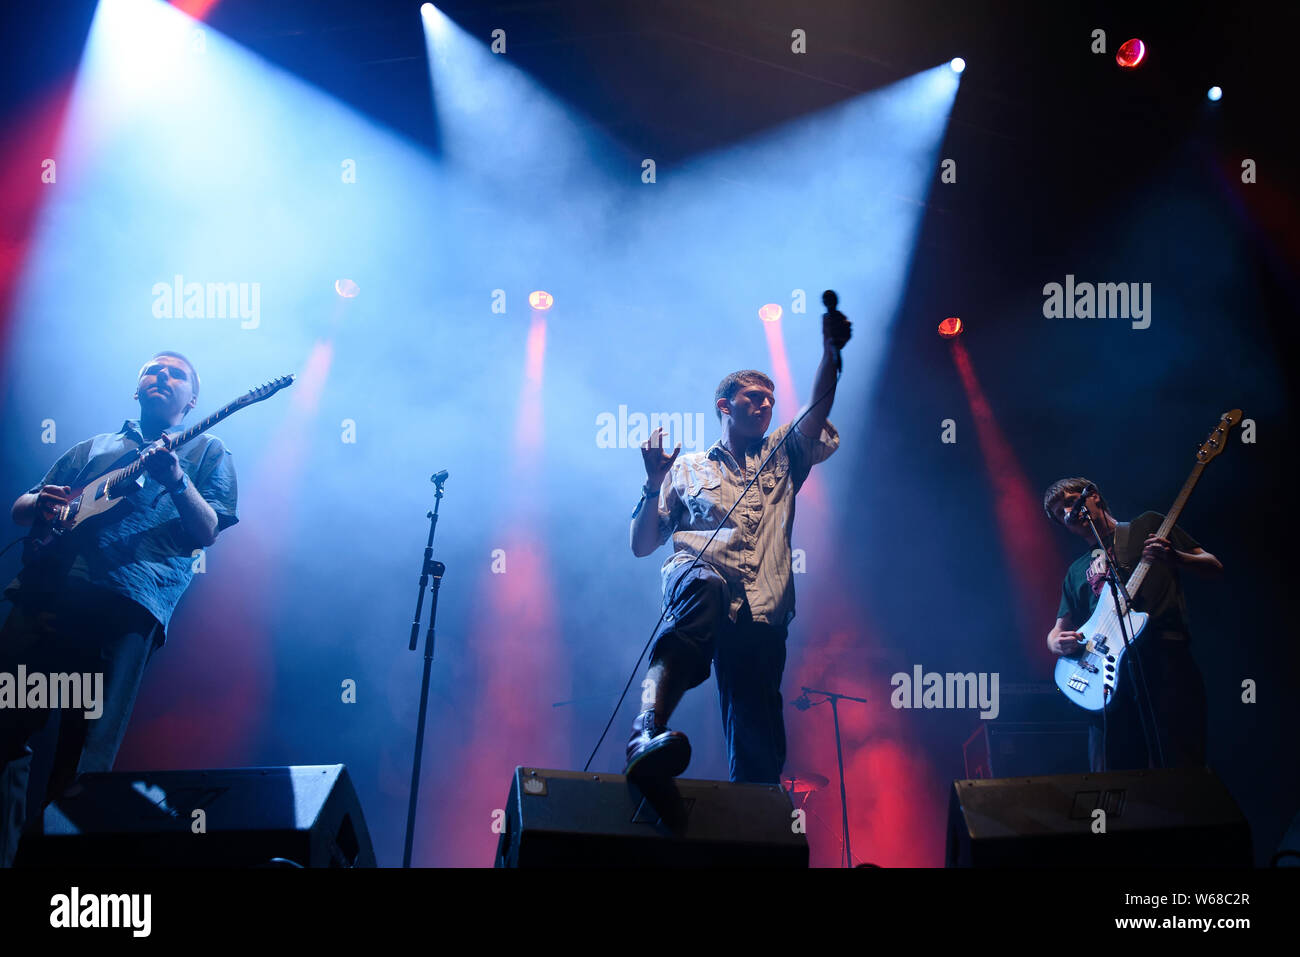 BILBAO, SPAIN - JUL 13: Shame (punk rock band) perform in concert at BBK Live 2019 Music Festival on July 13, 2019 in Bilbao, Spain. Stock Photo